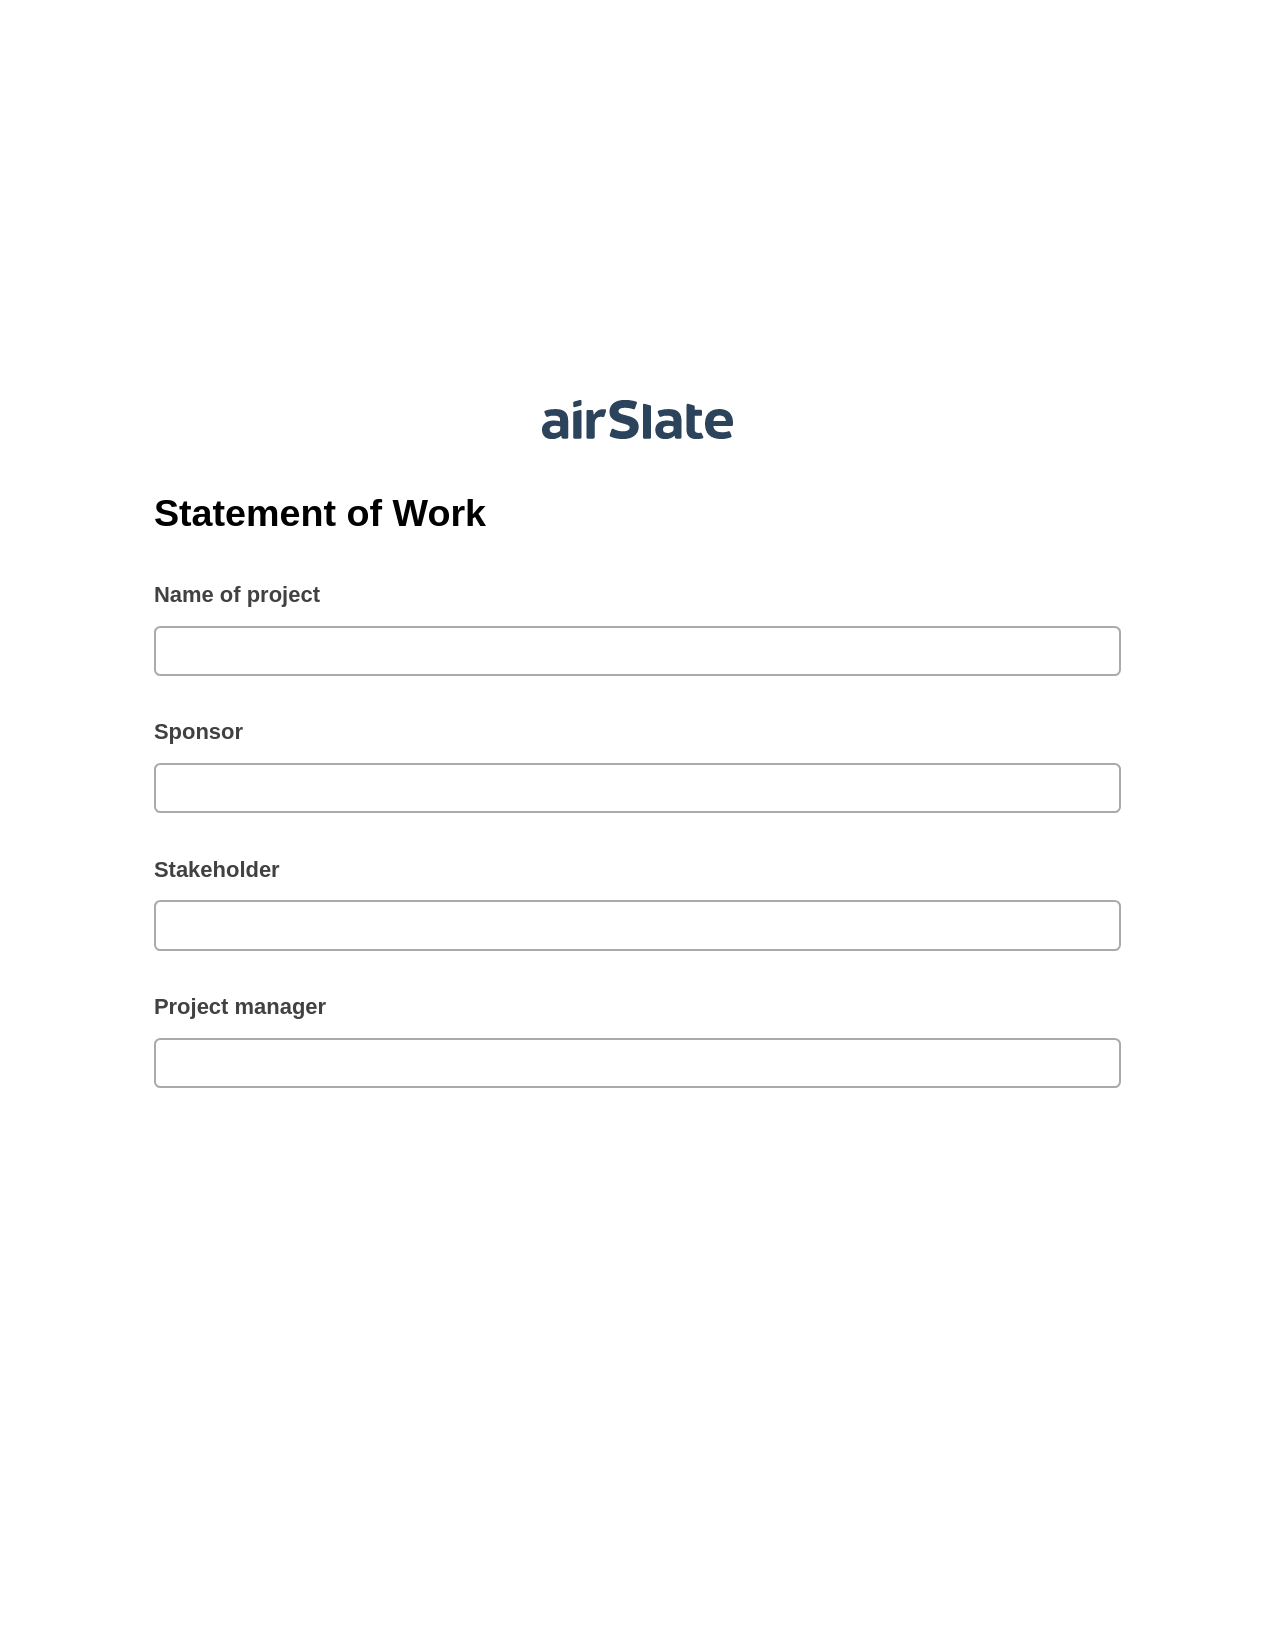 Statement of Work Pre-fill from Google Sheet Dropdown Options Bot, Google Calendar Bot, Post-finish Document Bot